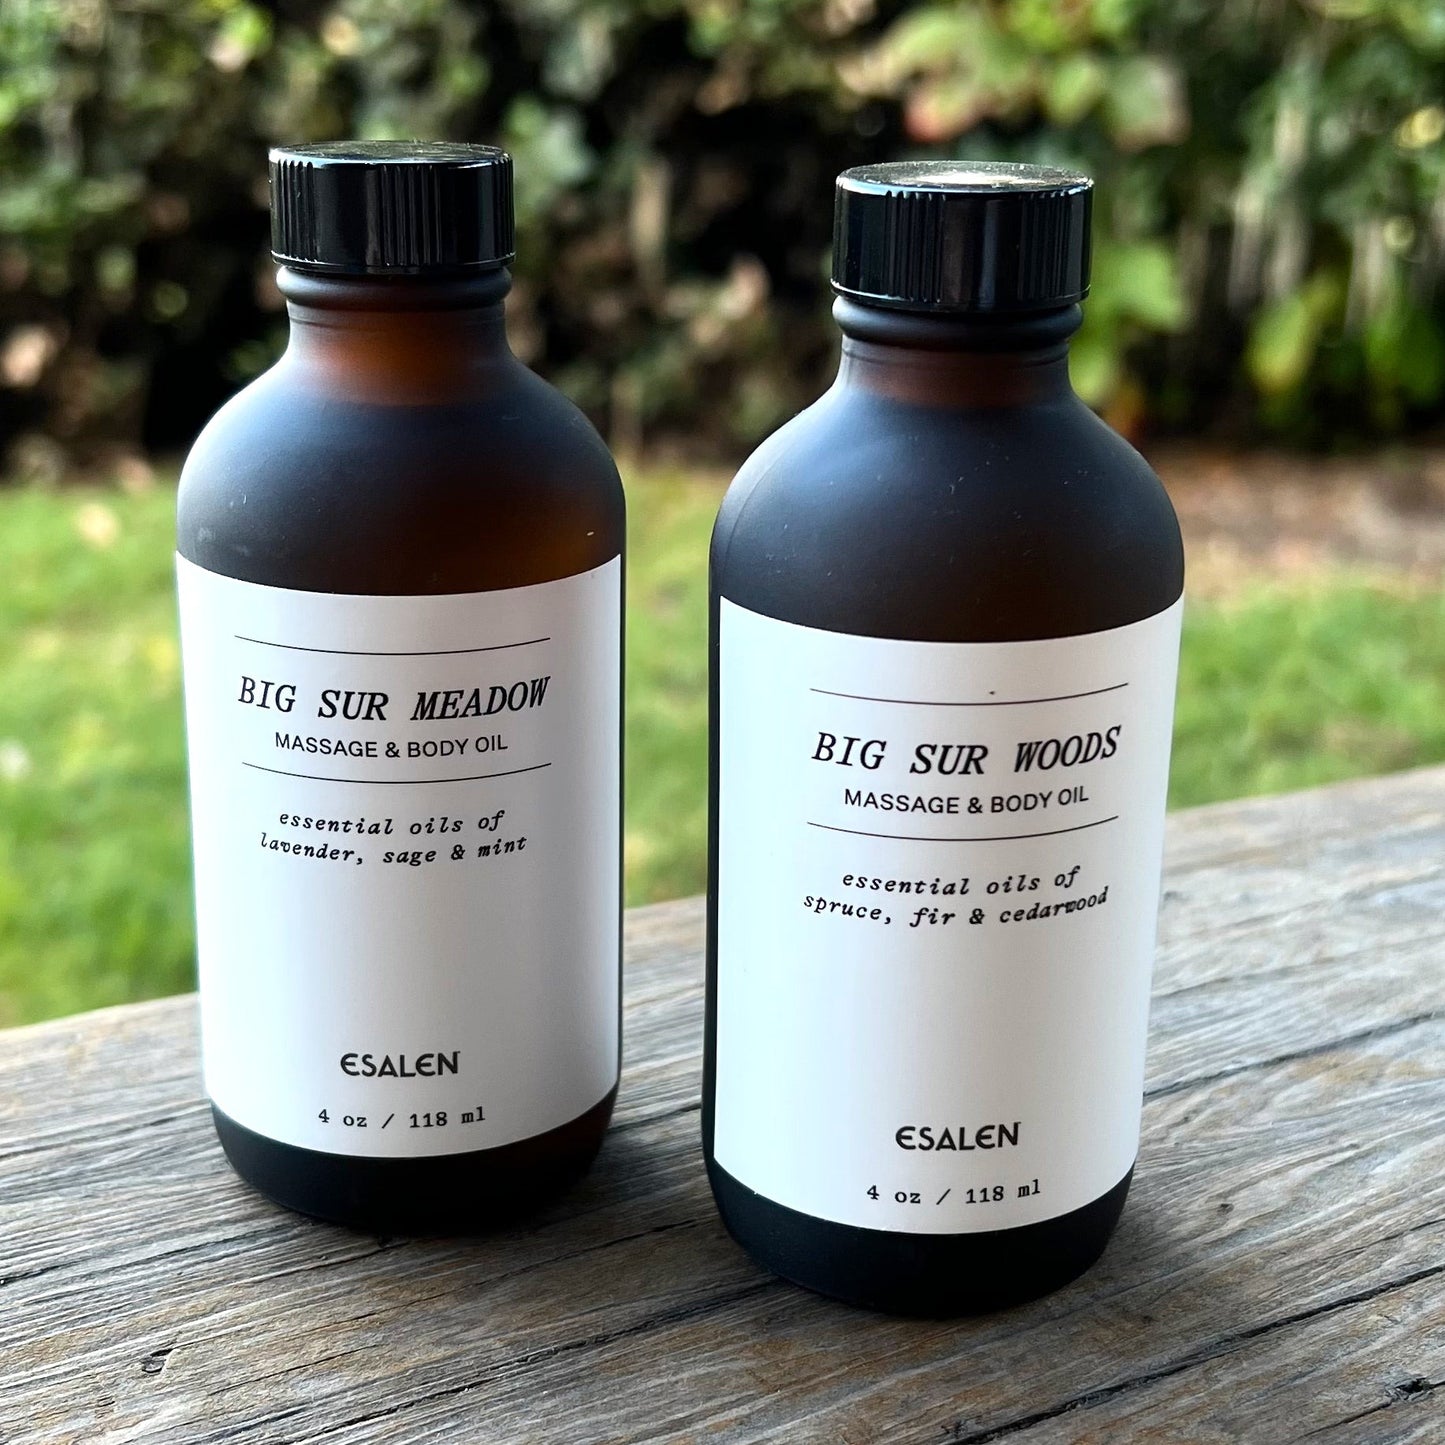 Big Sur Meadow Massage & Body Oil by Esalen